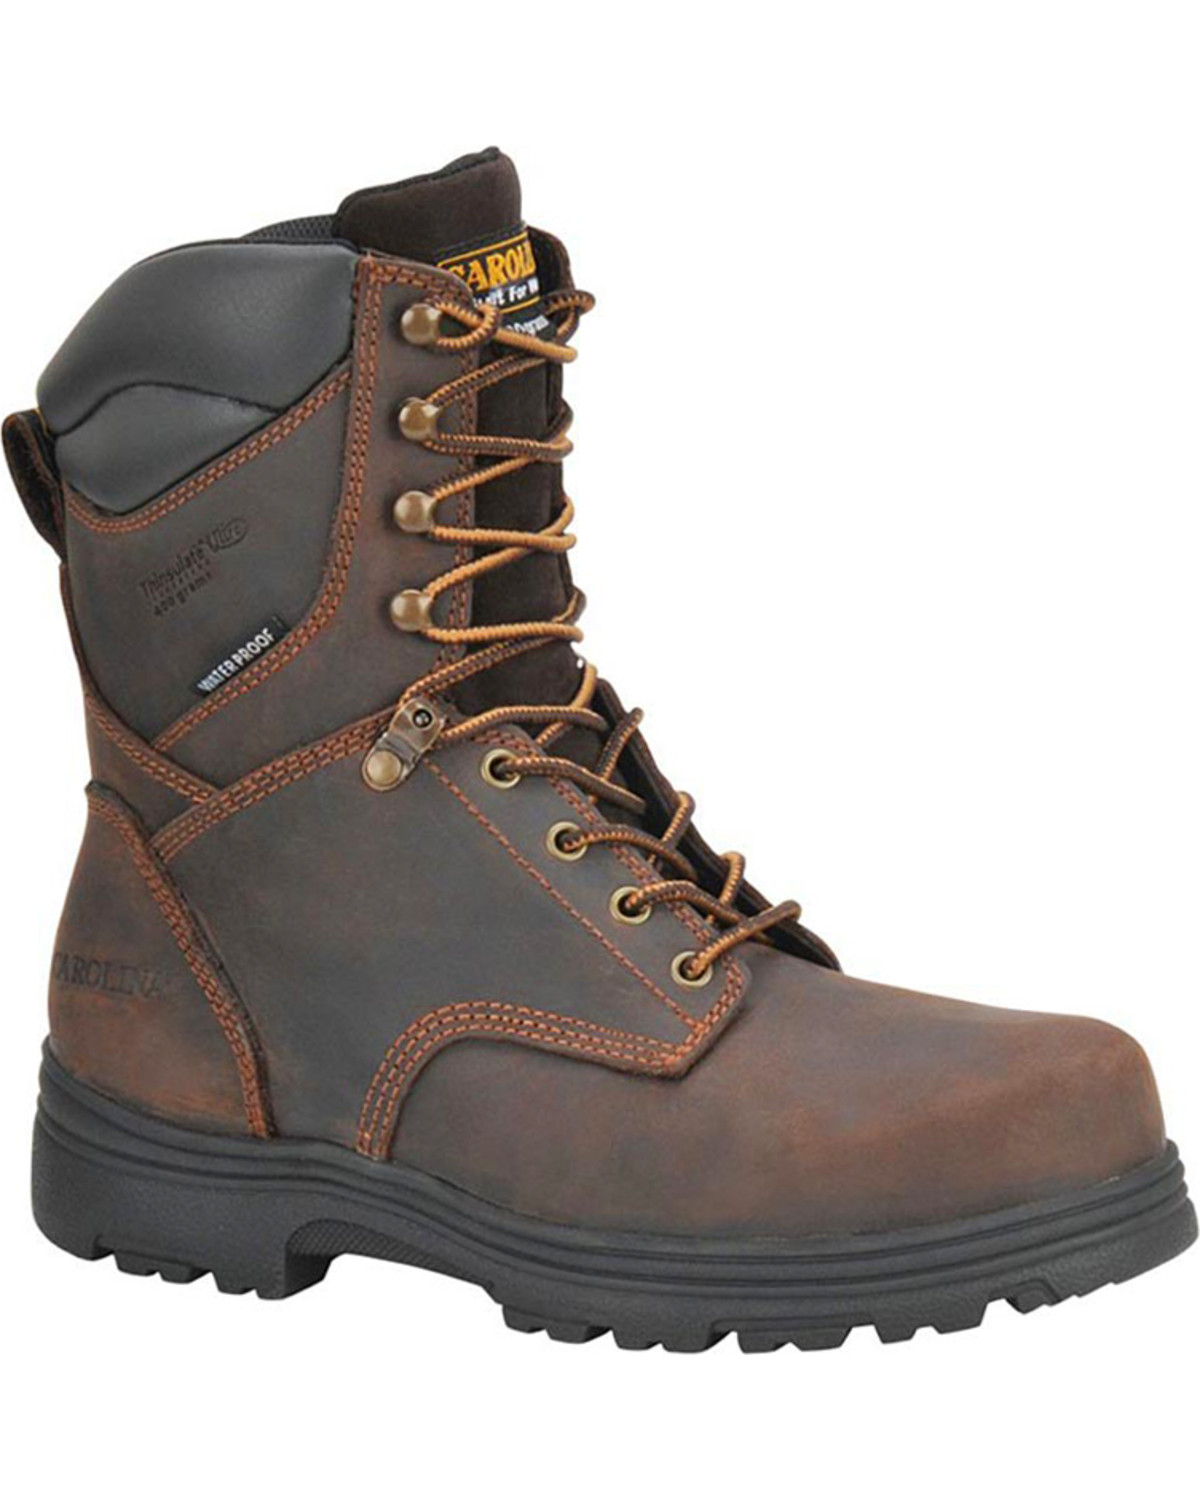 Carolina Men's 8" Waterproof Insulated Work Boots - Steel Toe